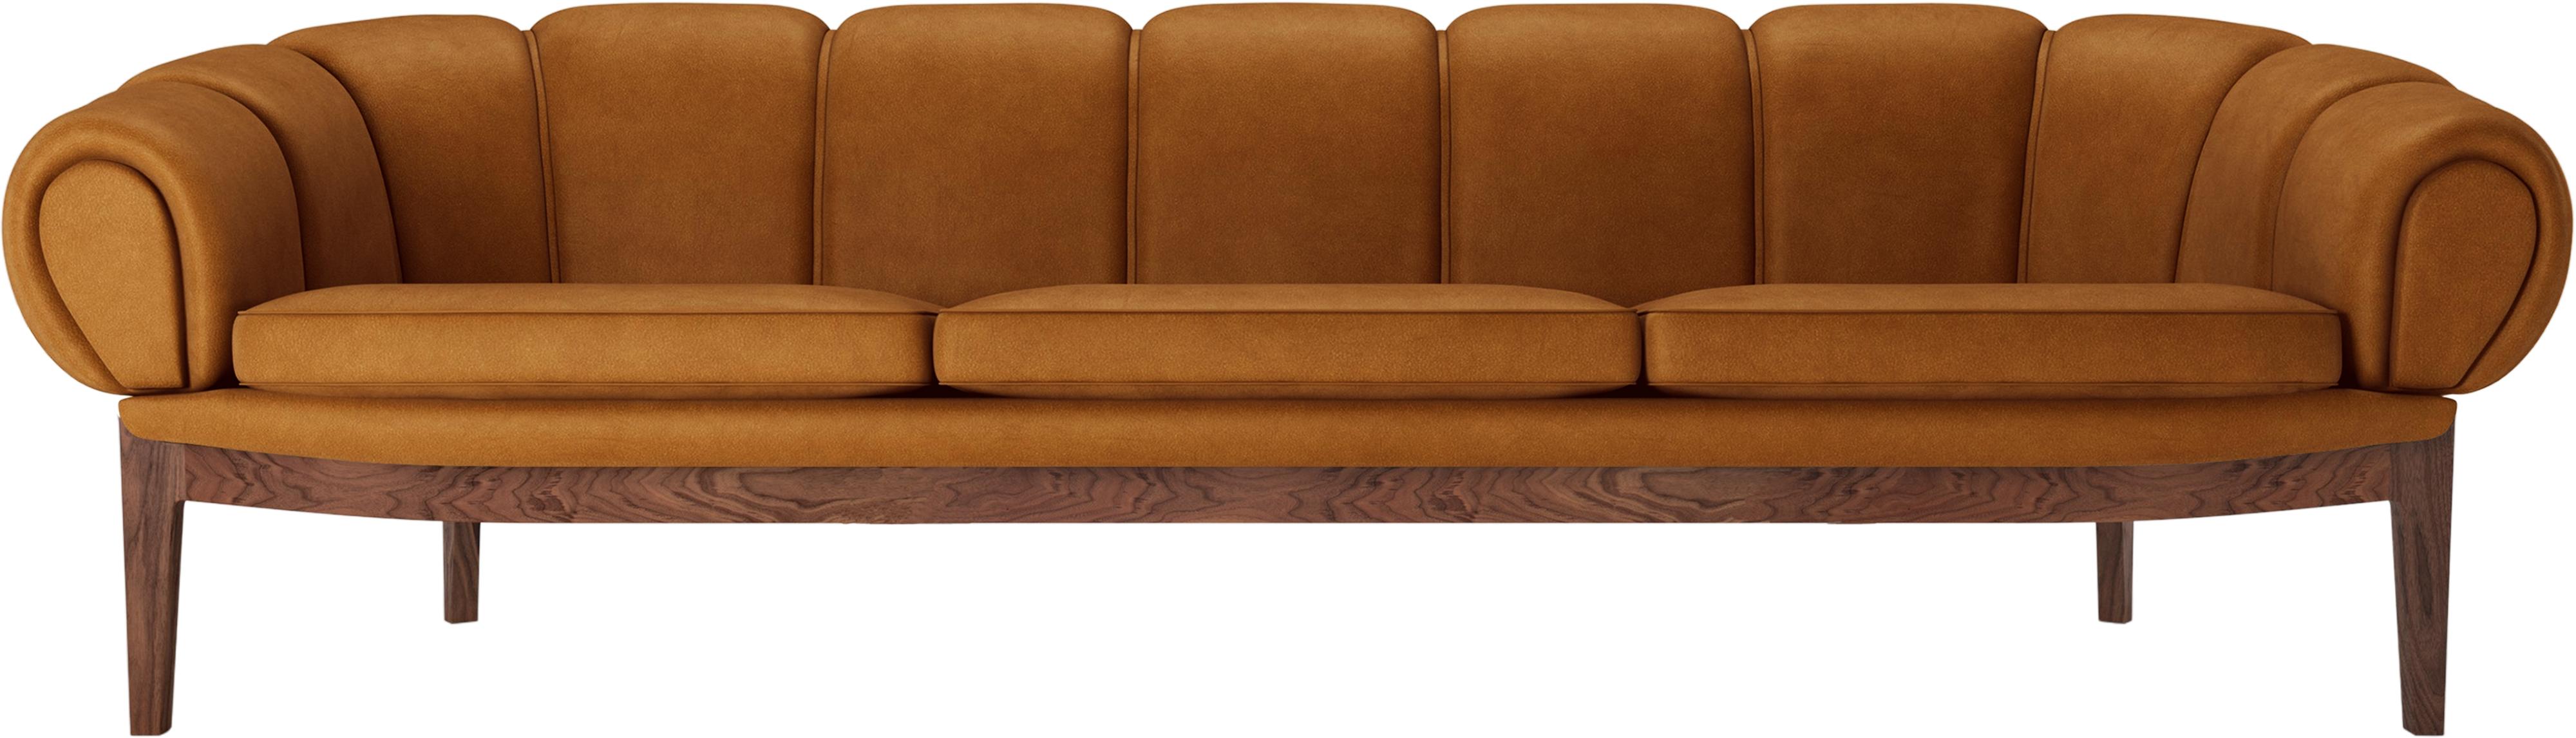 Leather 'Croissant' Sofa by Illum Wikkelsø for Gubi with Oak Legs For Sale 8